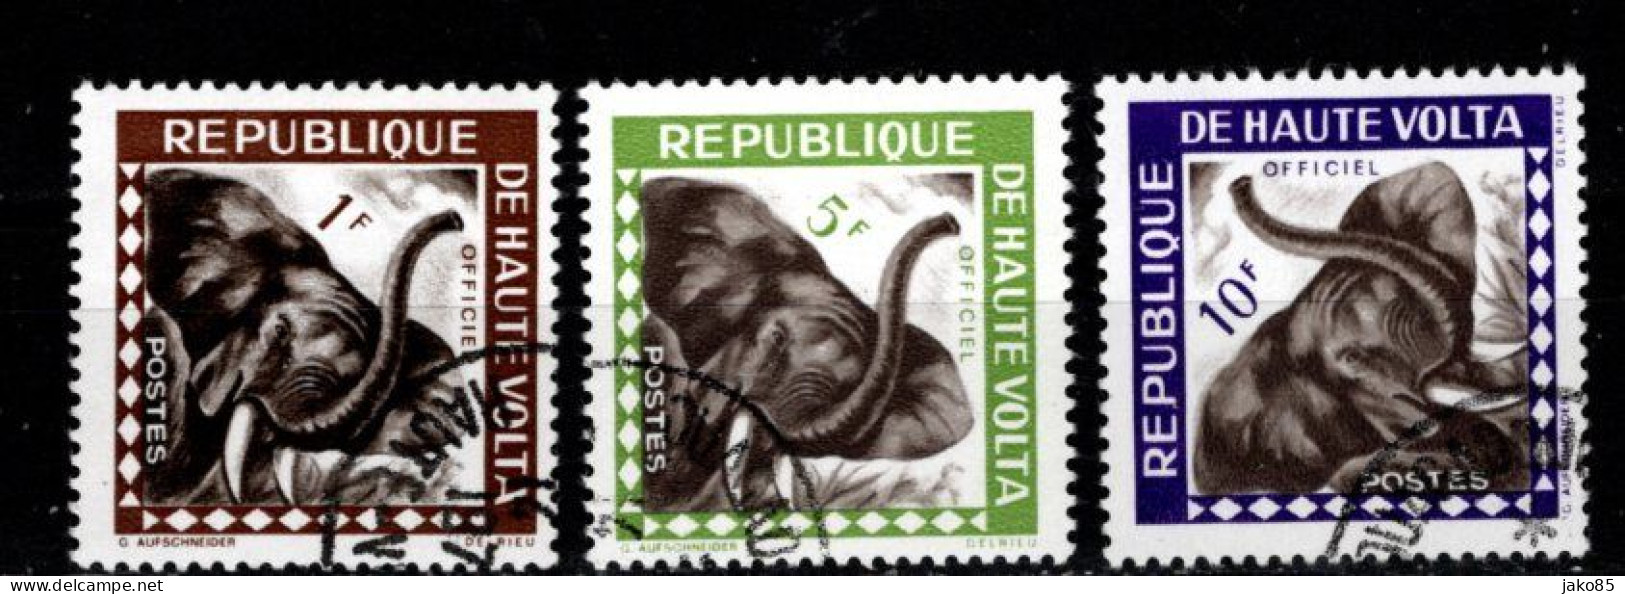 - HAUTE VOLTA - 1963 - YT N° Taxe 1 / 3 - Oblitérés - Tete D'Elephant - Haute-Volta (1958-1984)